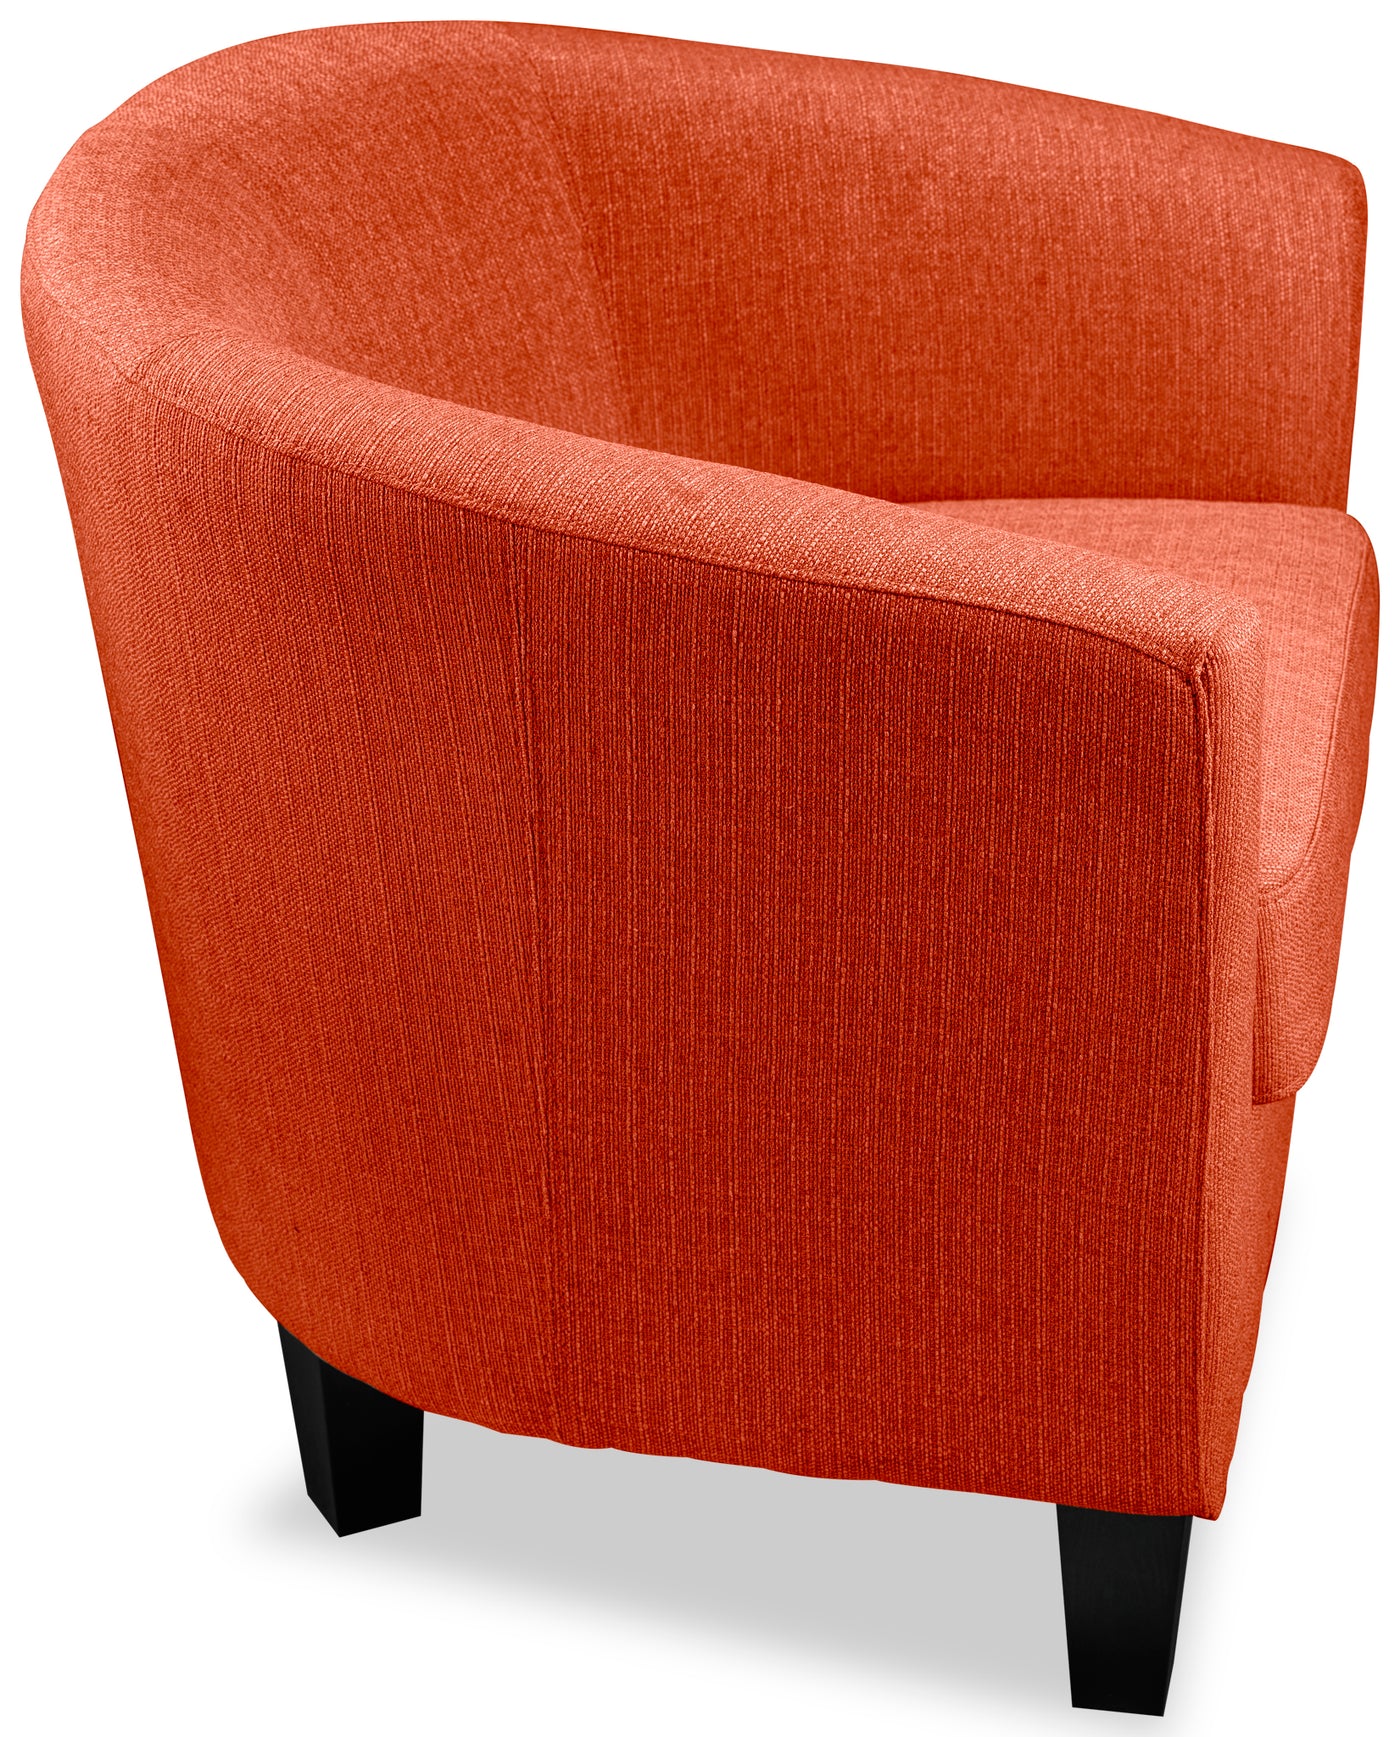 Enzo Accent Chair - Orange